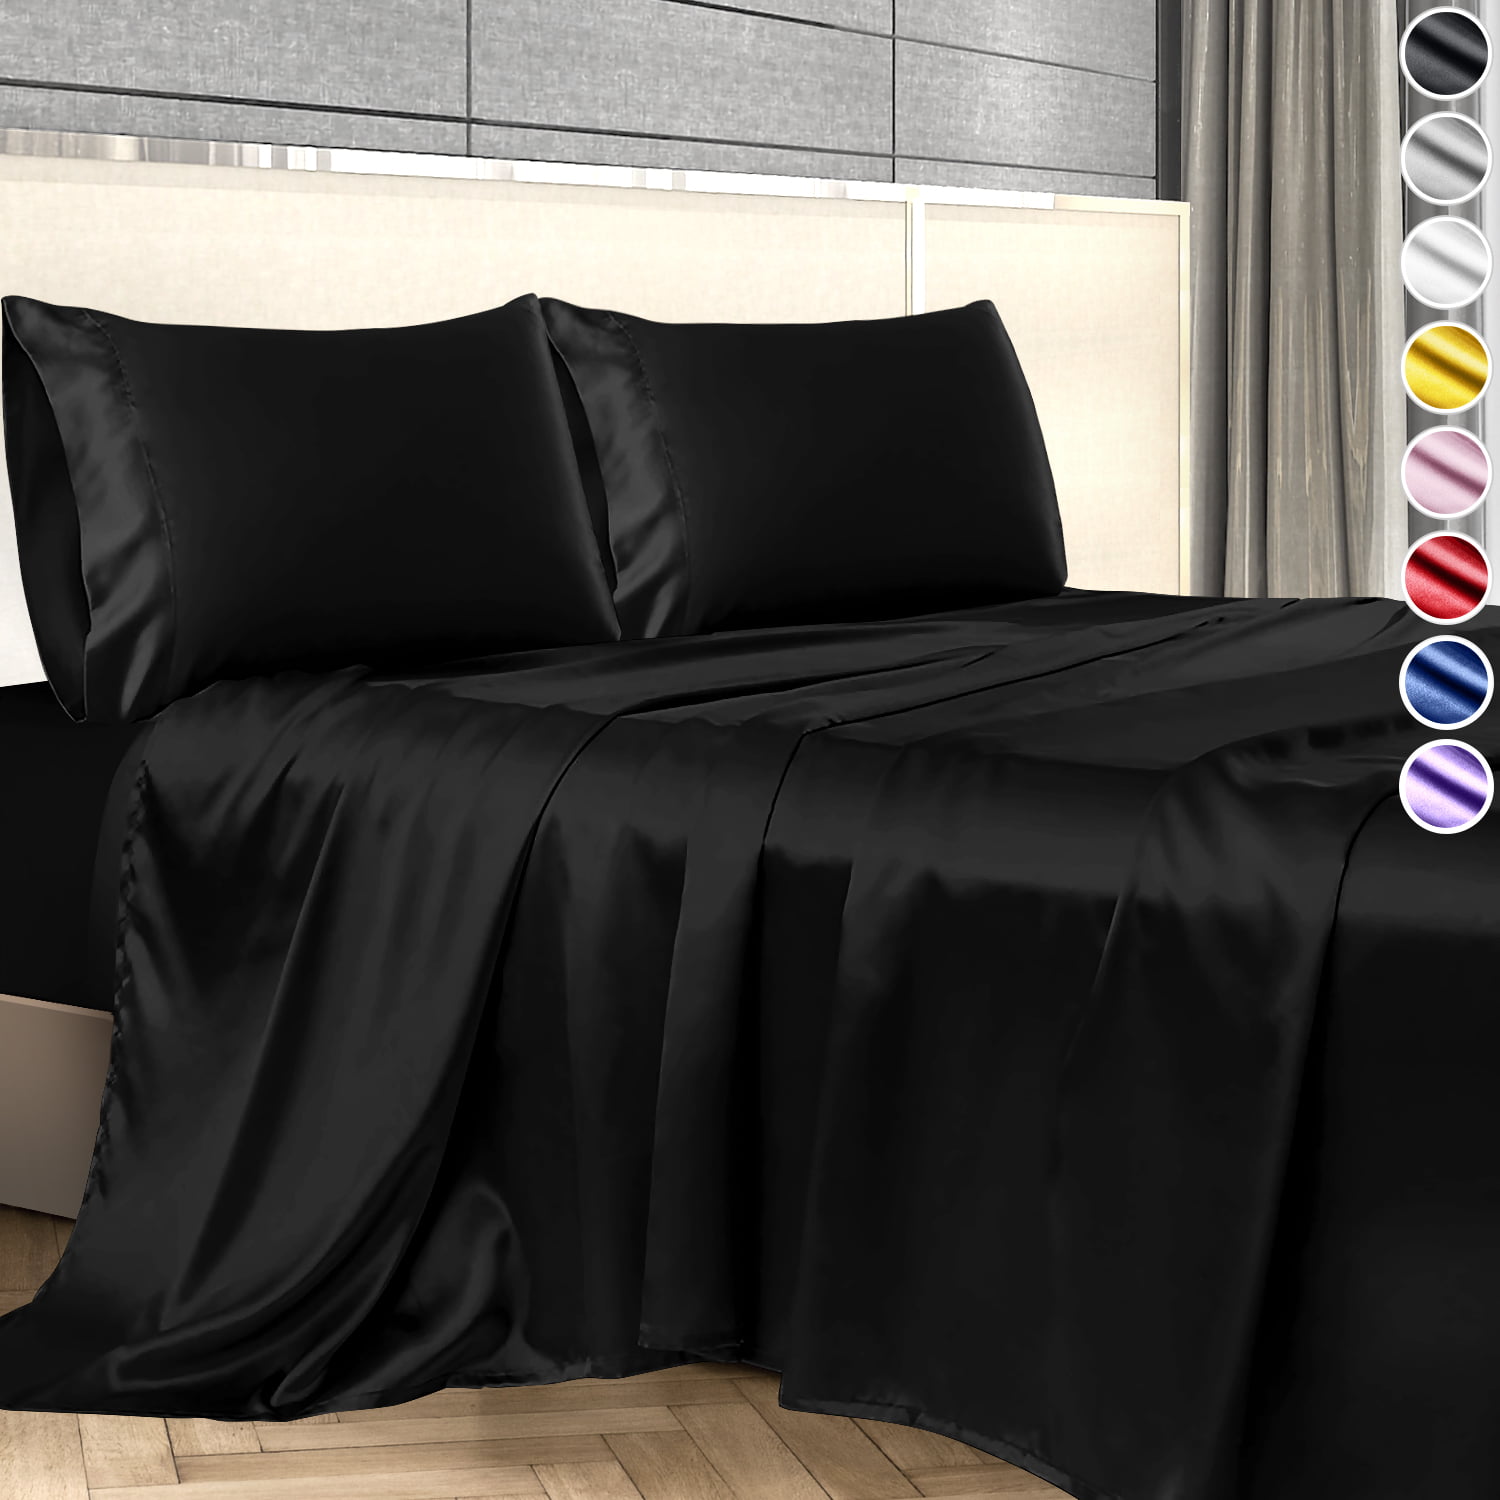 NEW 4 pc Emonia 1000tc Microfiber Luxury Sheet Set 2 pillow case Dark Gray Queen 